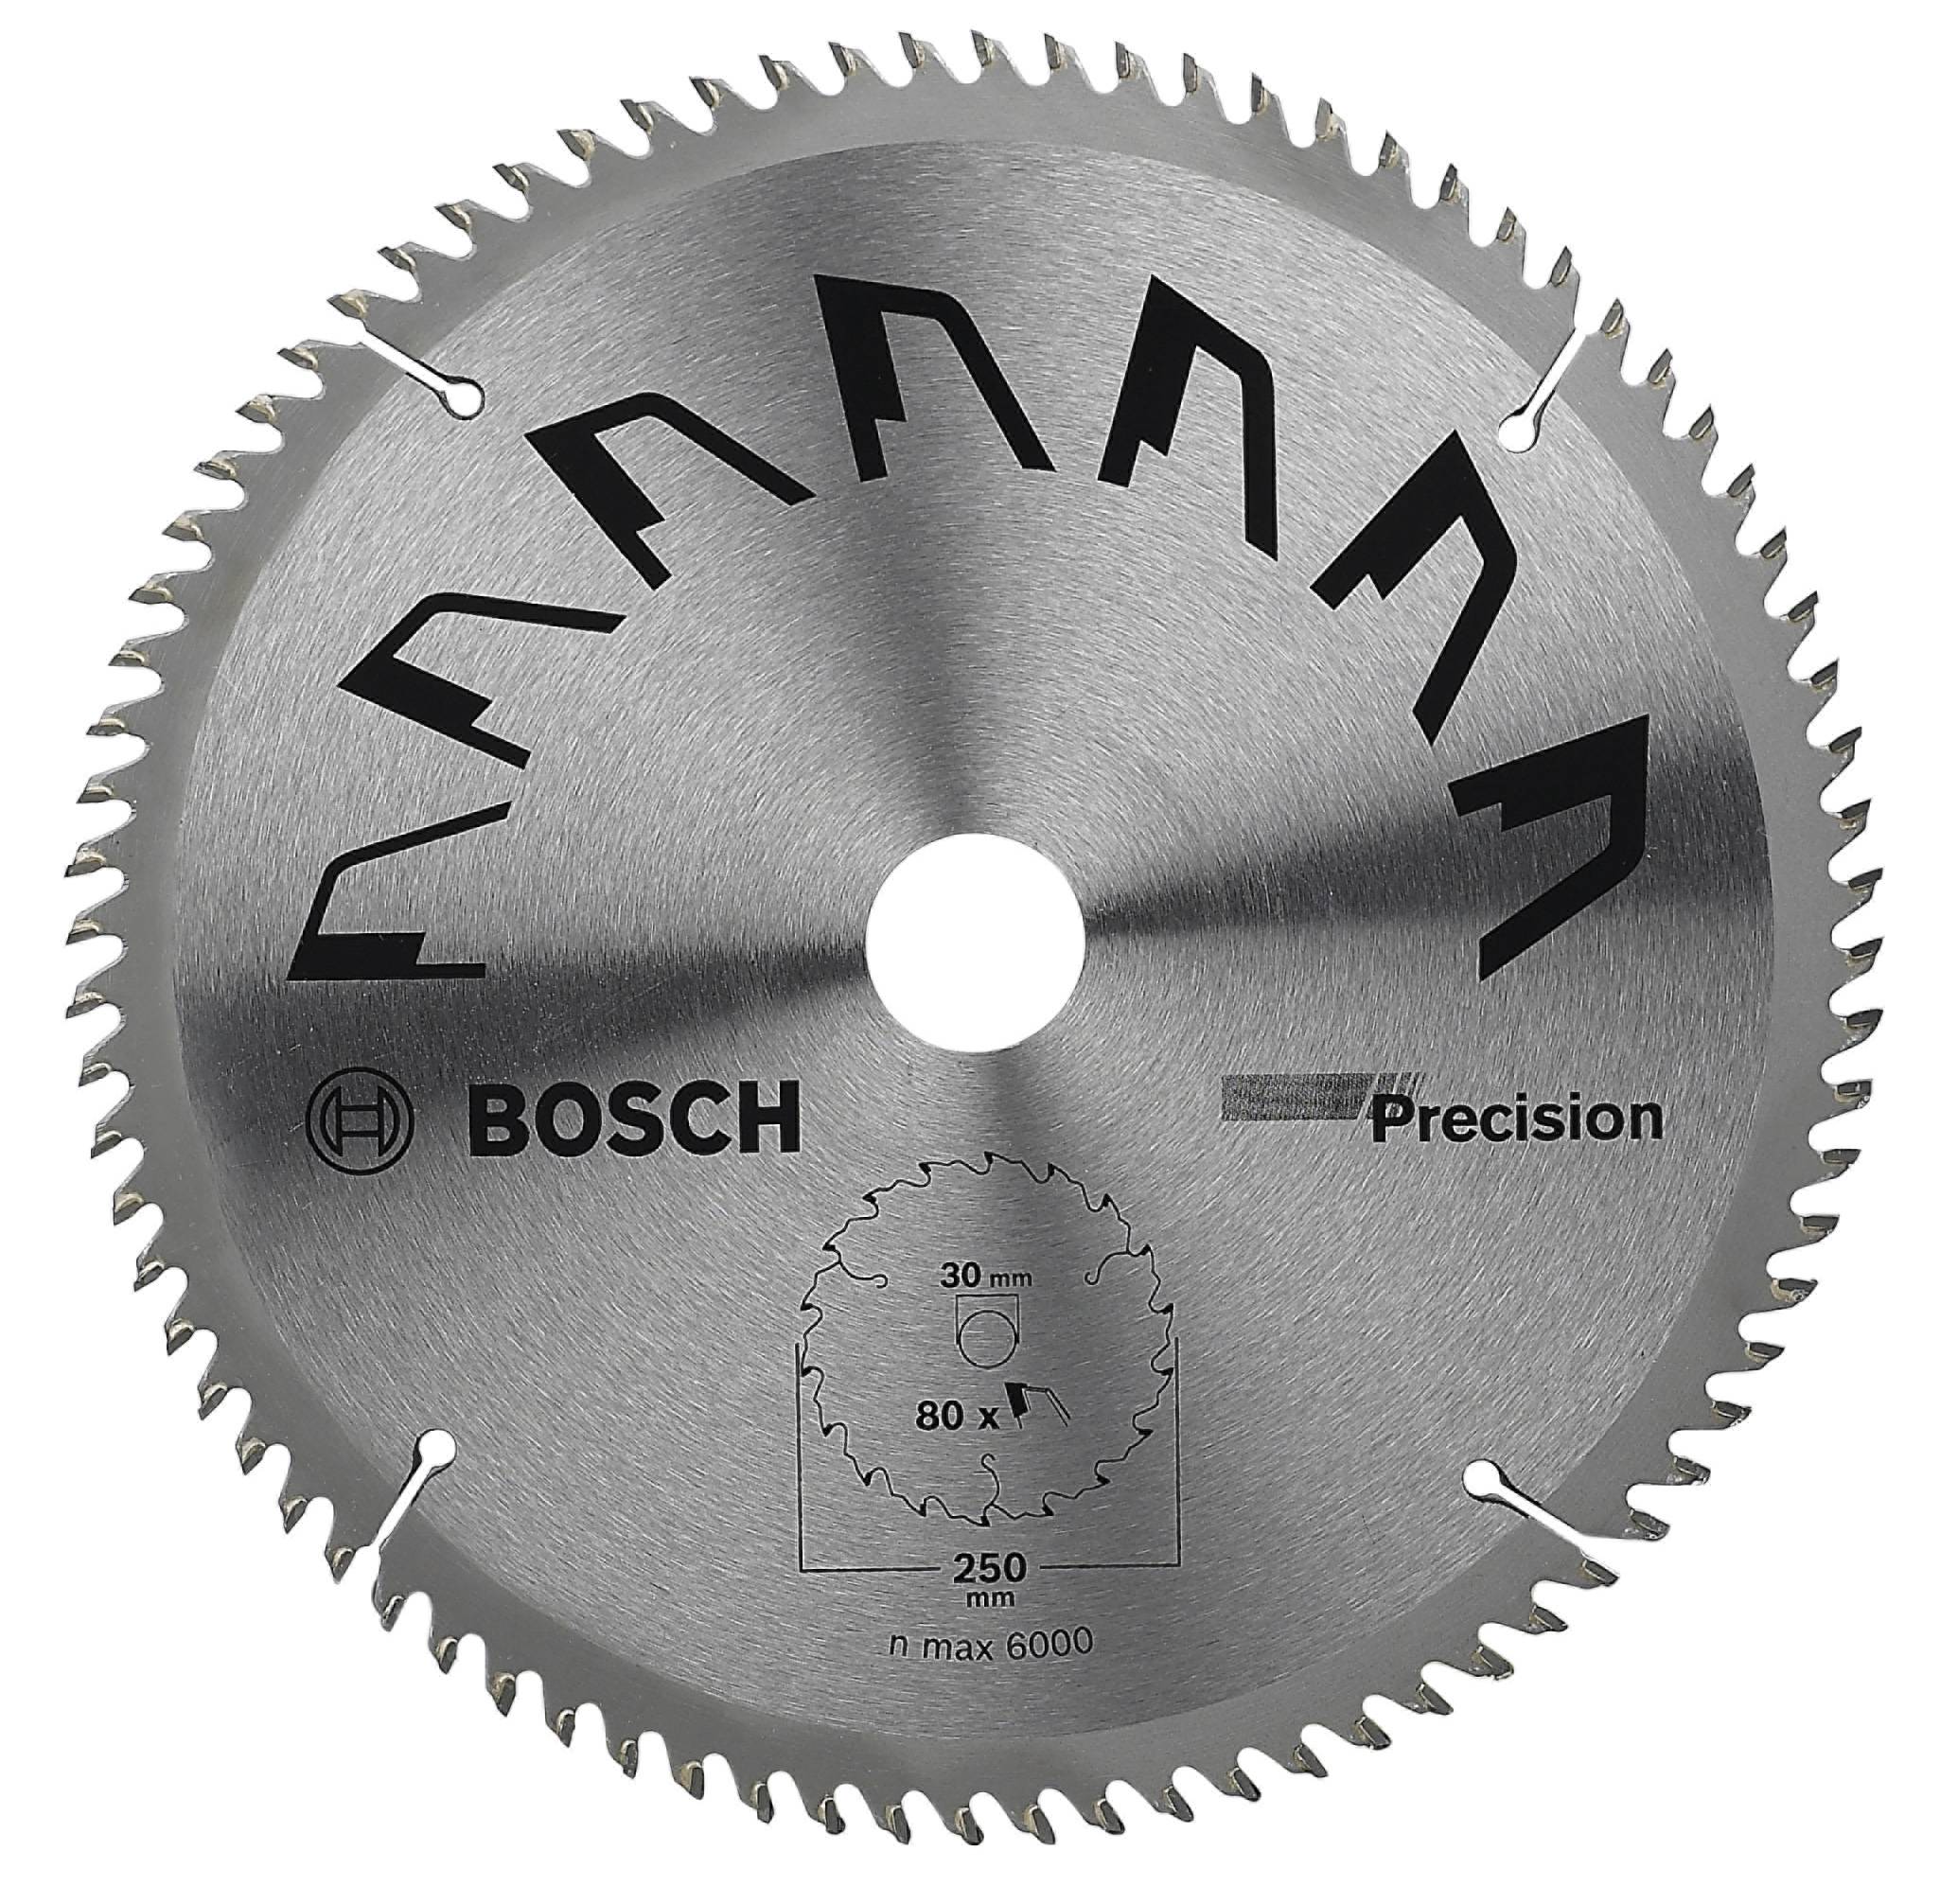 BOSCH Kreissägeblatt PRECISION 2609256882 Durchmesser: 250 mm Anzahl Zähne (pro\" ): 80 Sägeblatt (26